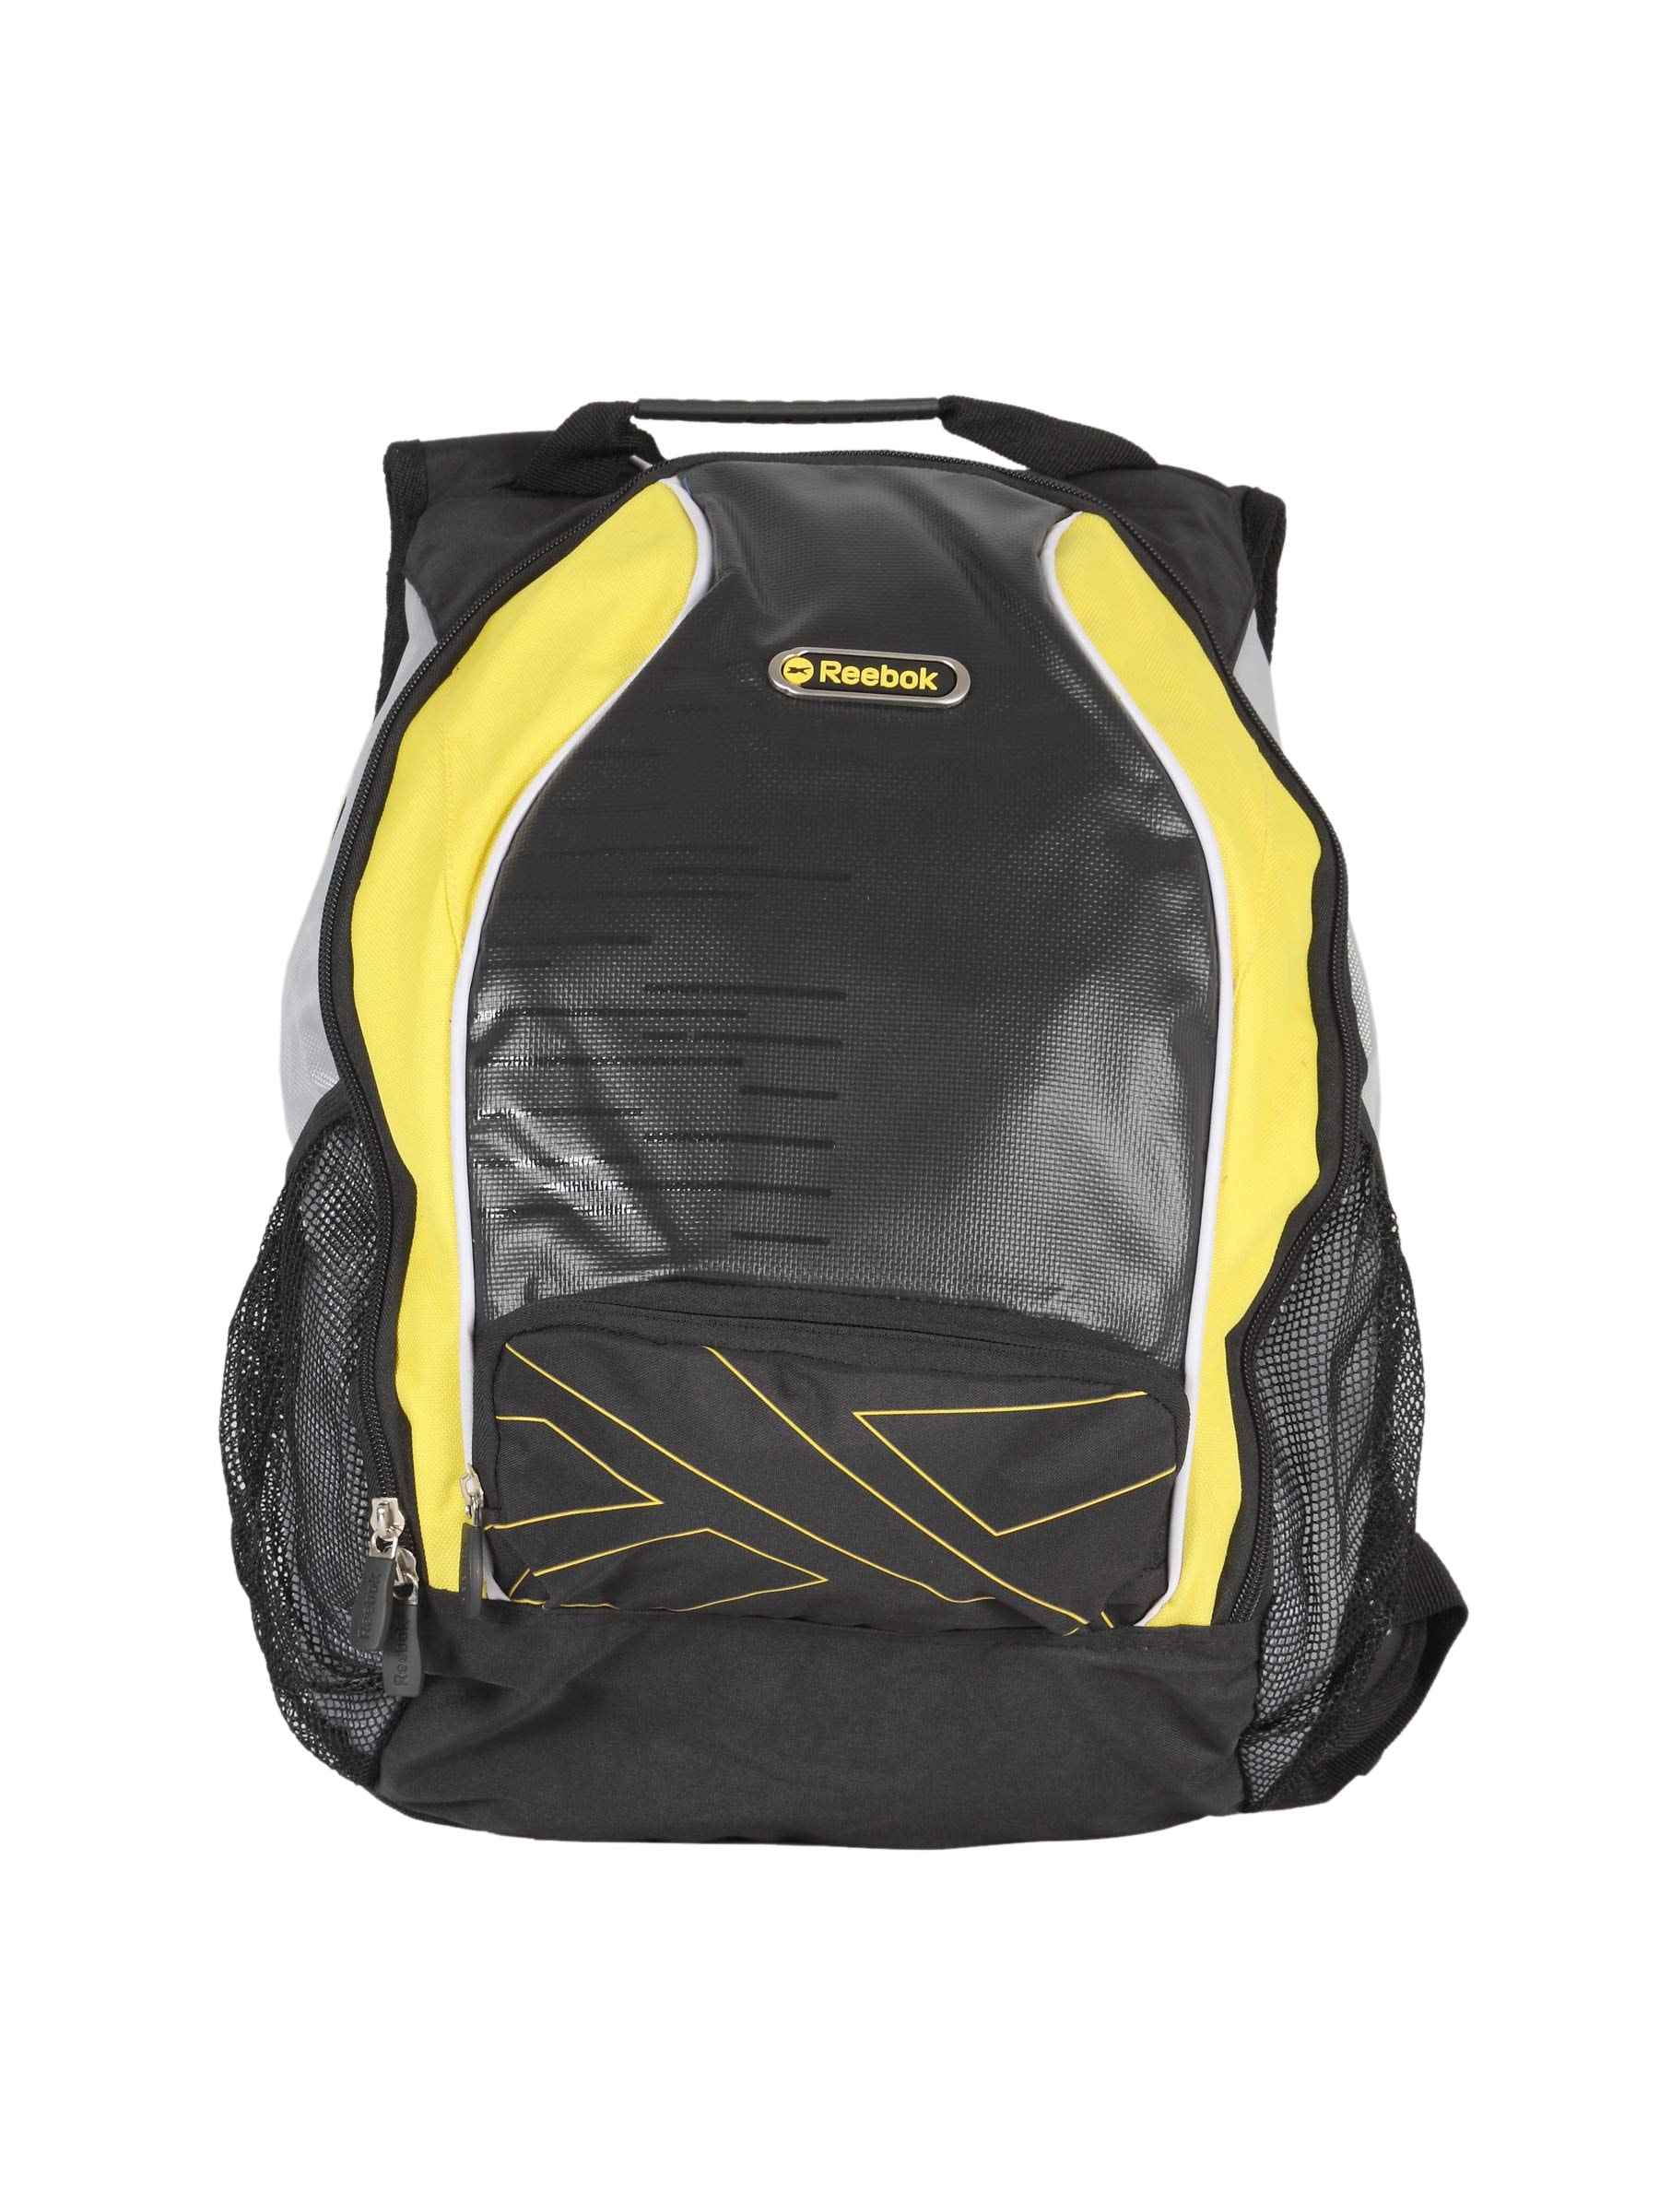 Reebok Unisex Athletic Yellow Backpack